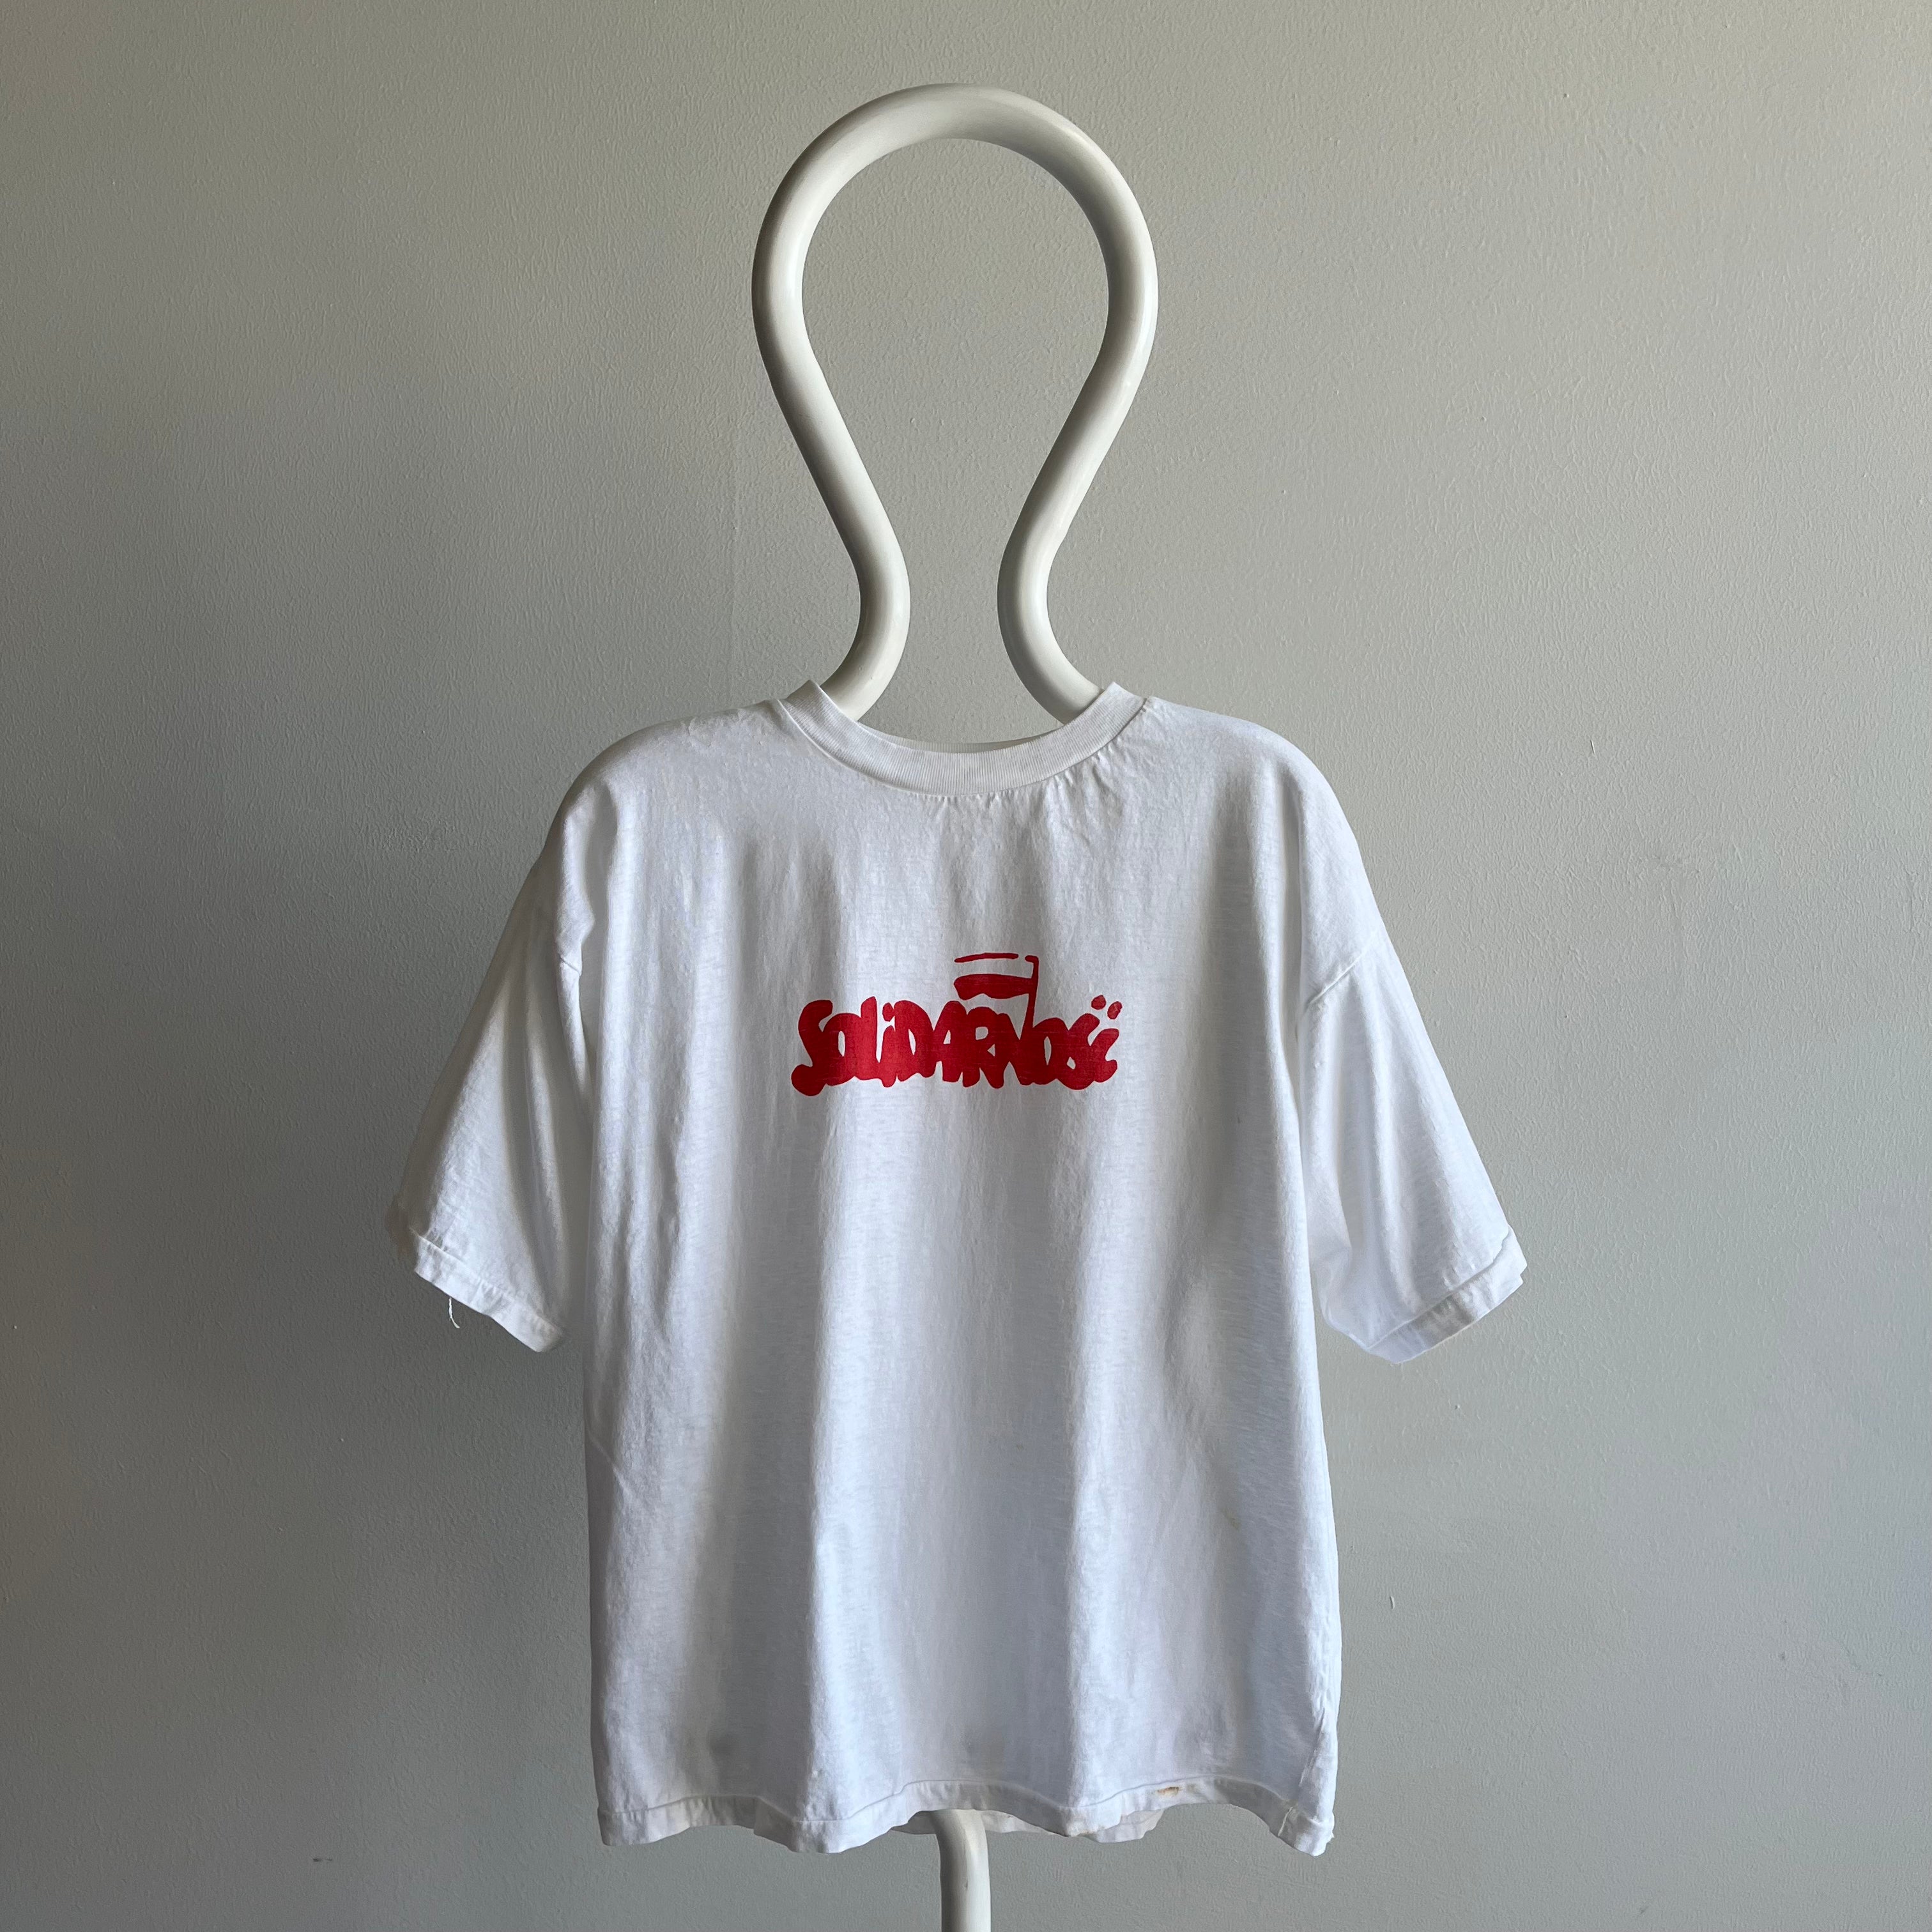 1980s Solidarnosci - A Self Governing Polish Trade Union - Cotton T-Shirt